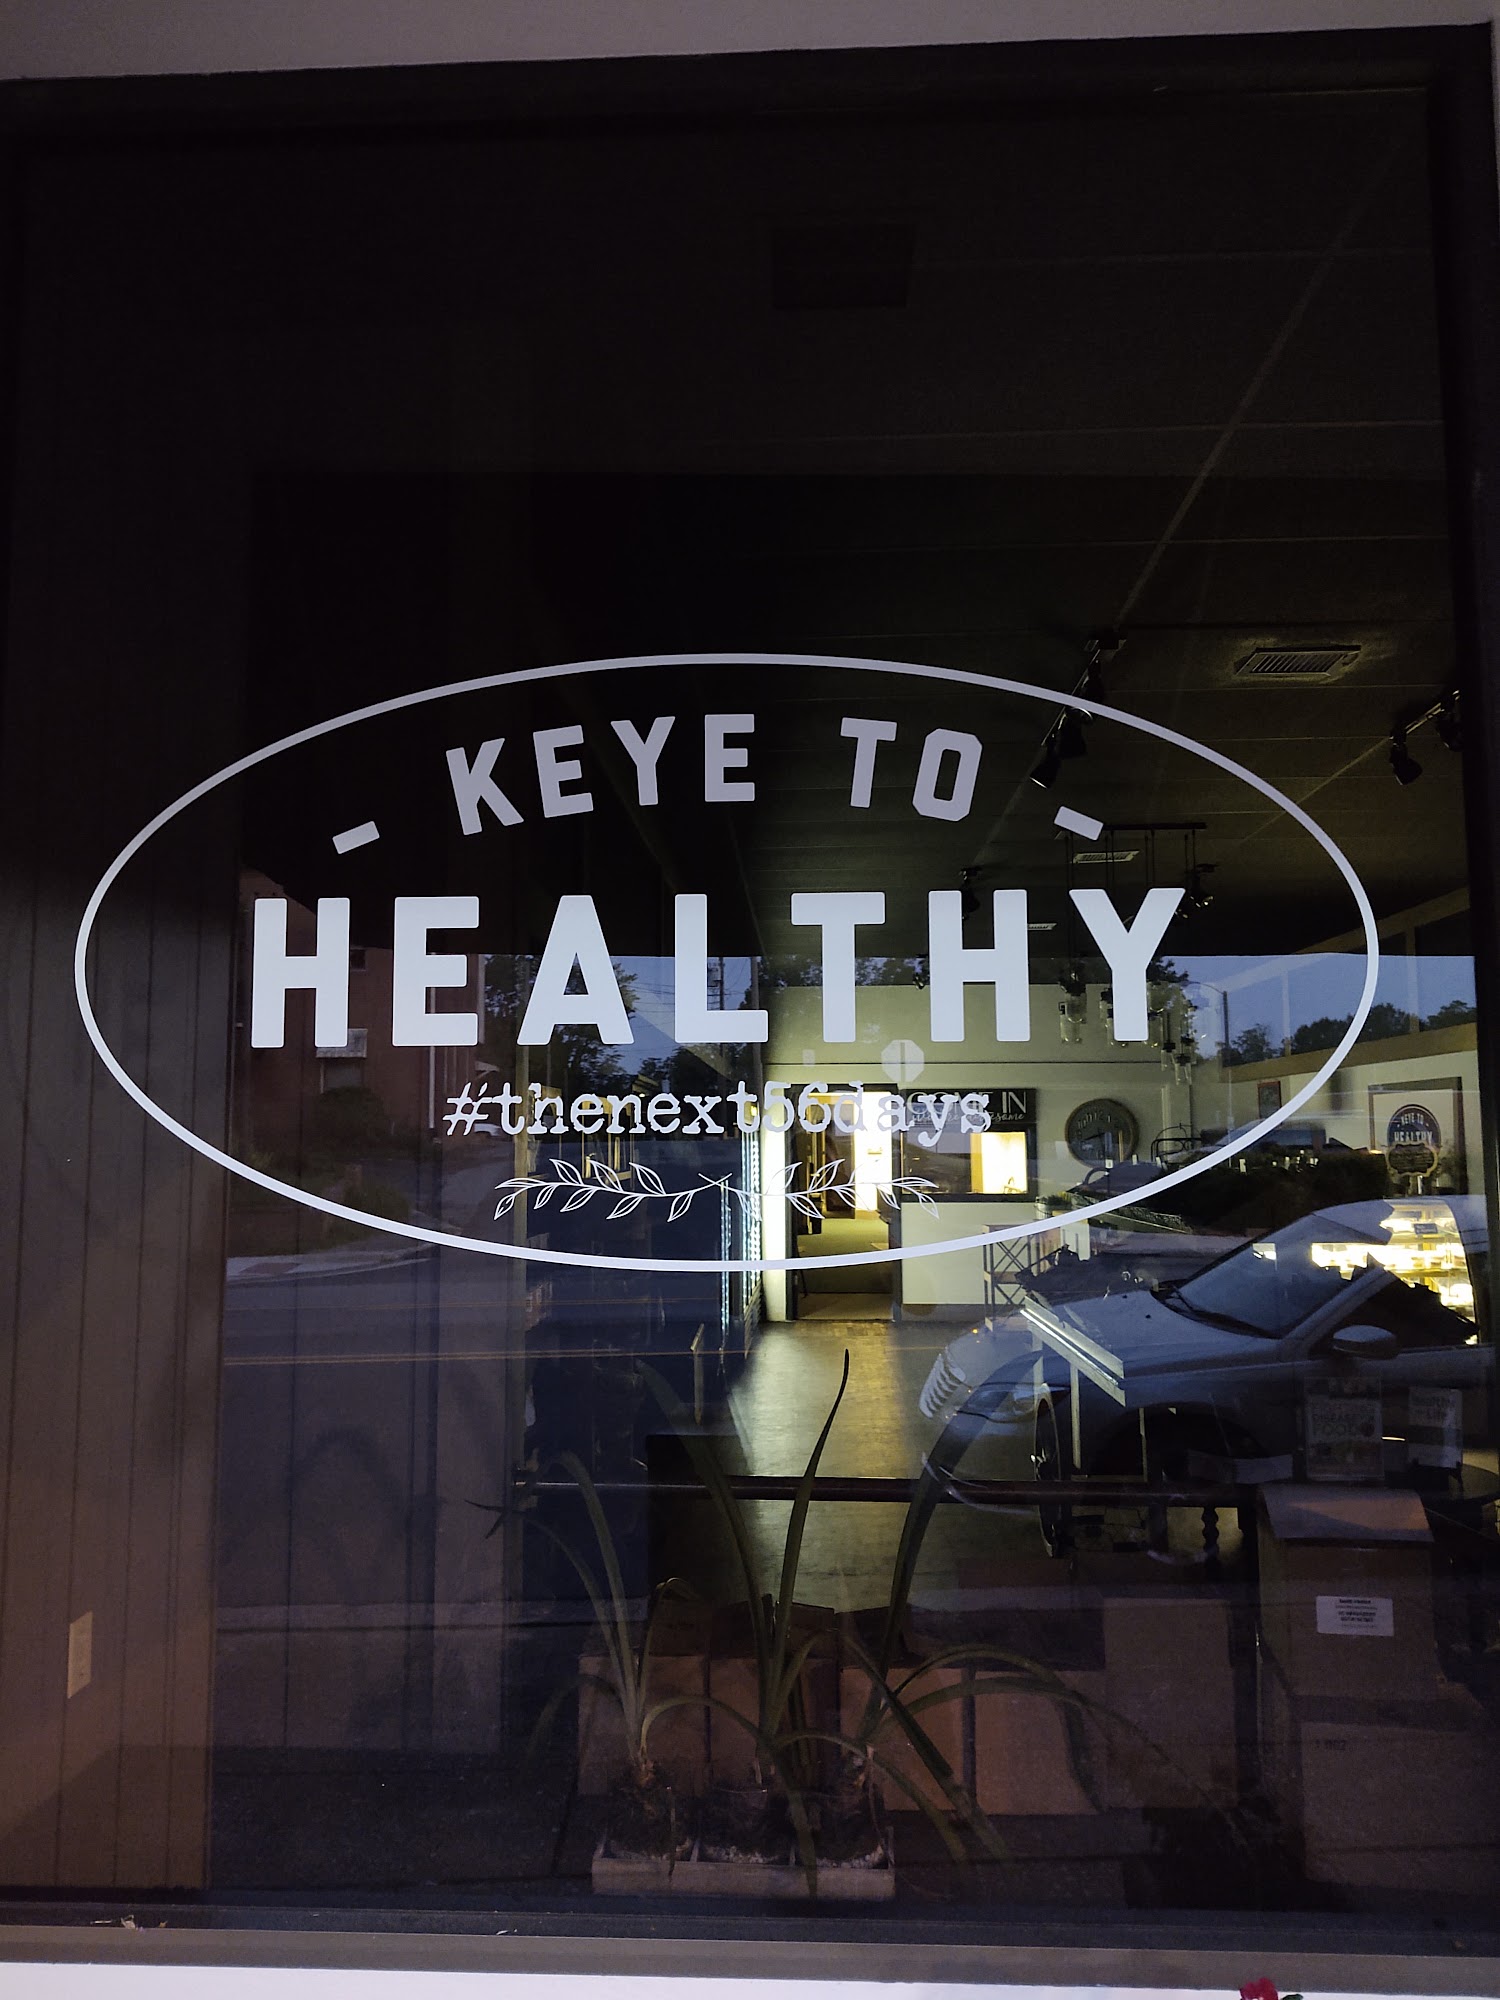 Keye to Healthy